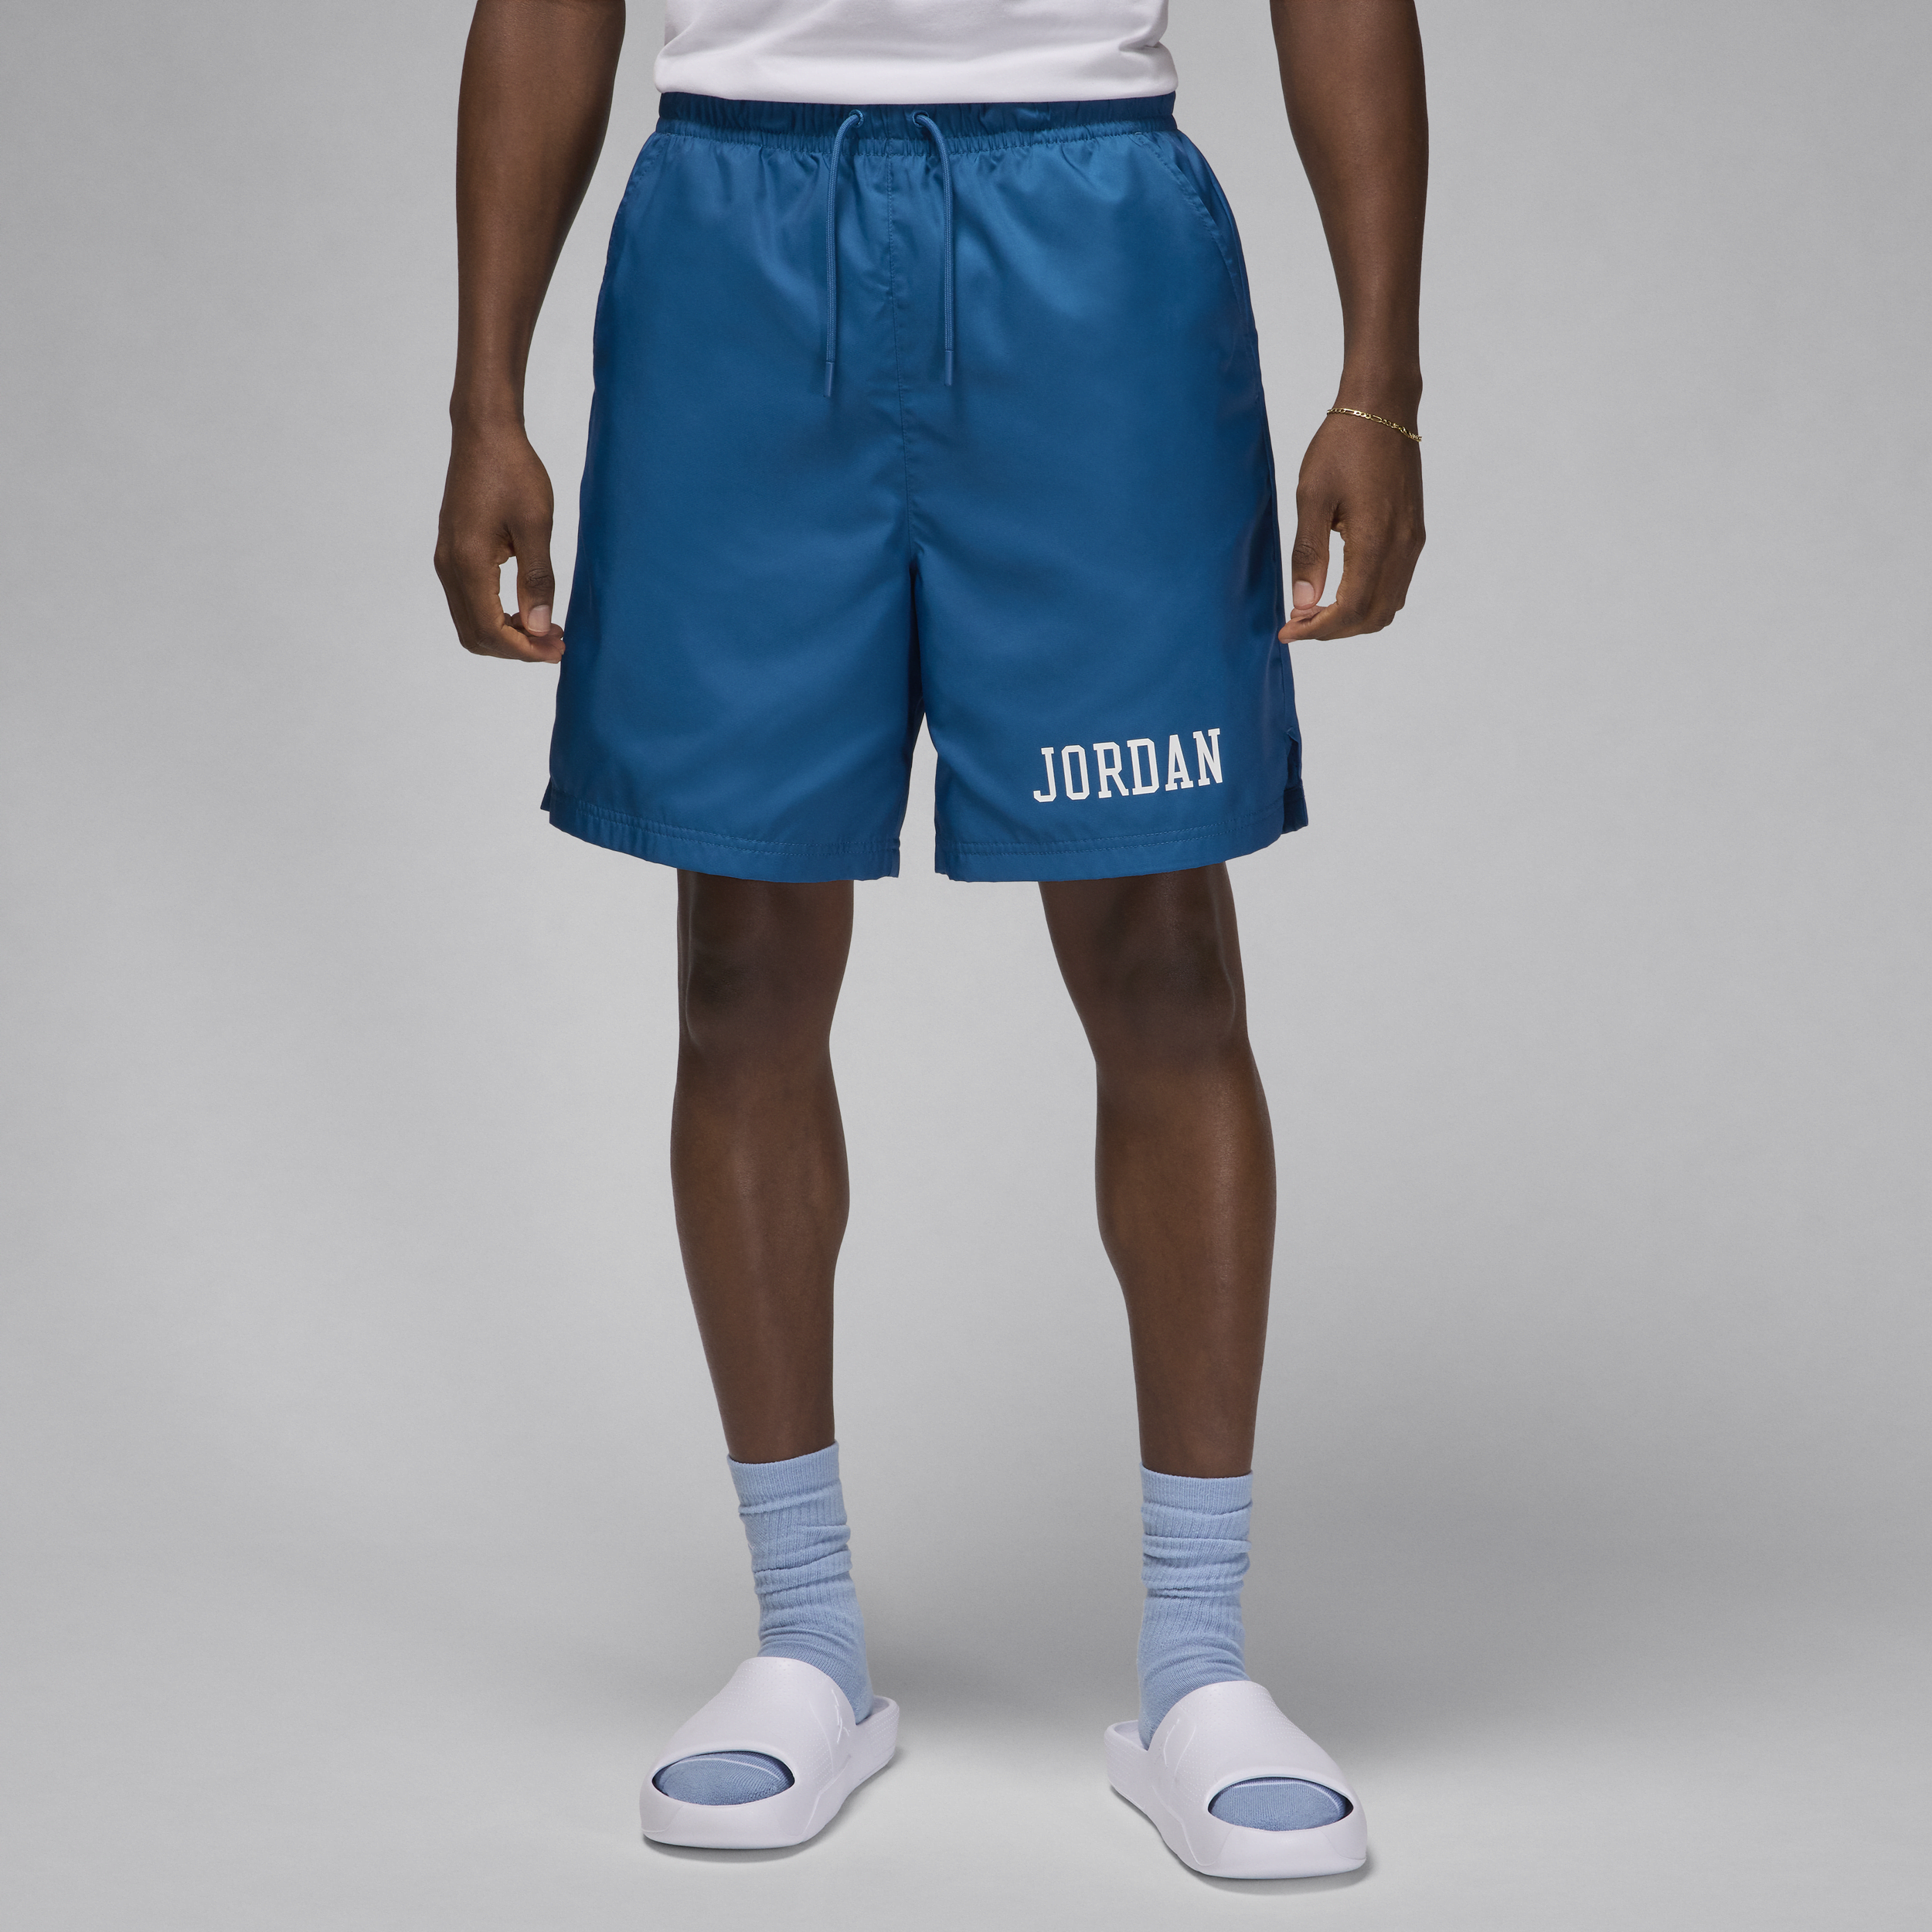 Jordan Essentials Pantalón corto piscina - Hombre - Azul